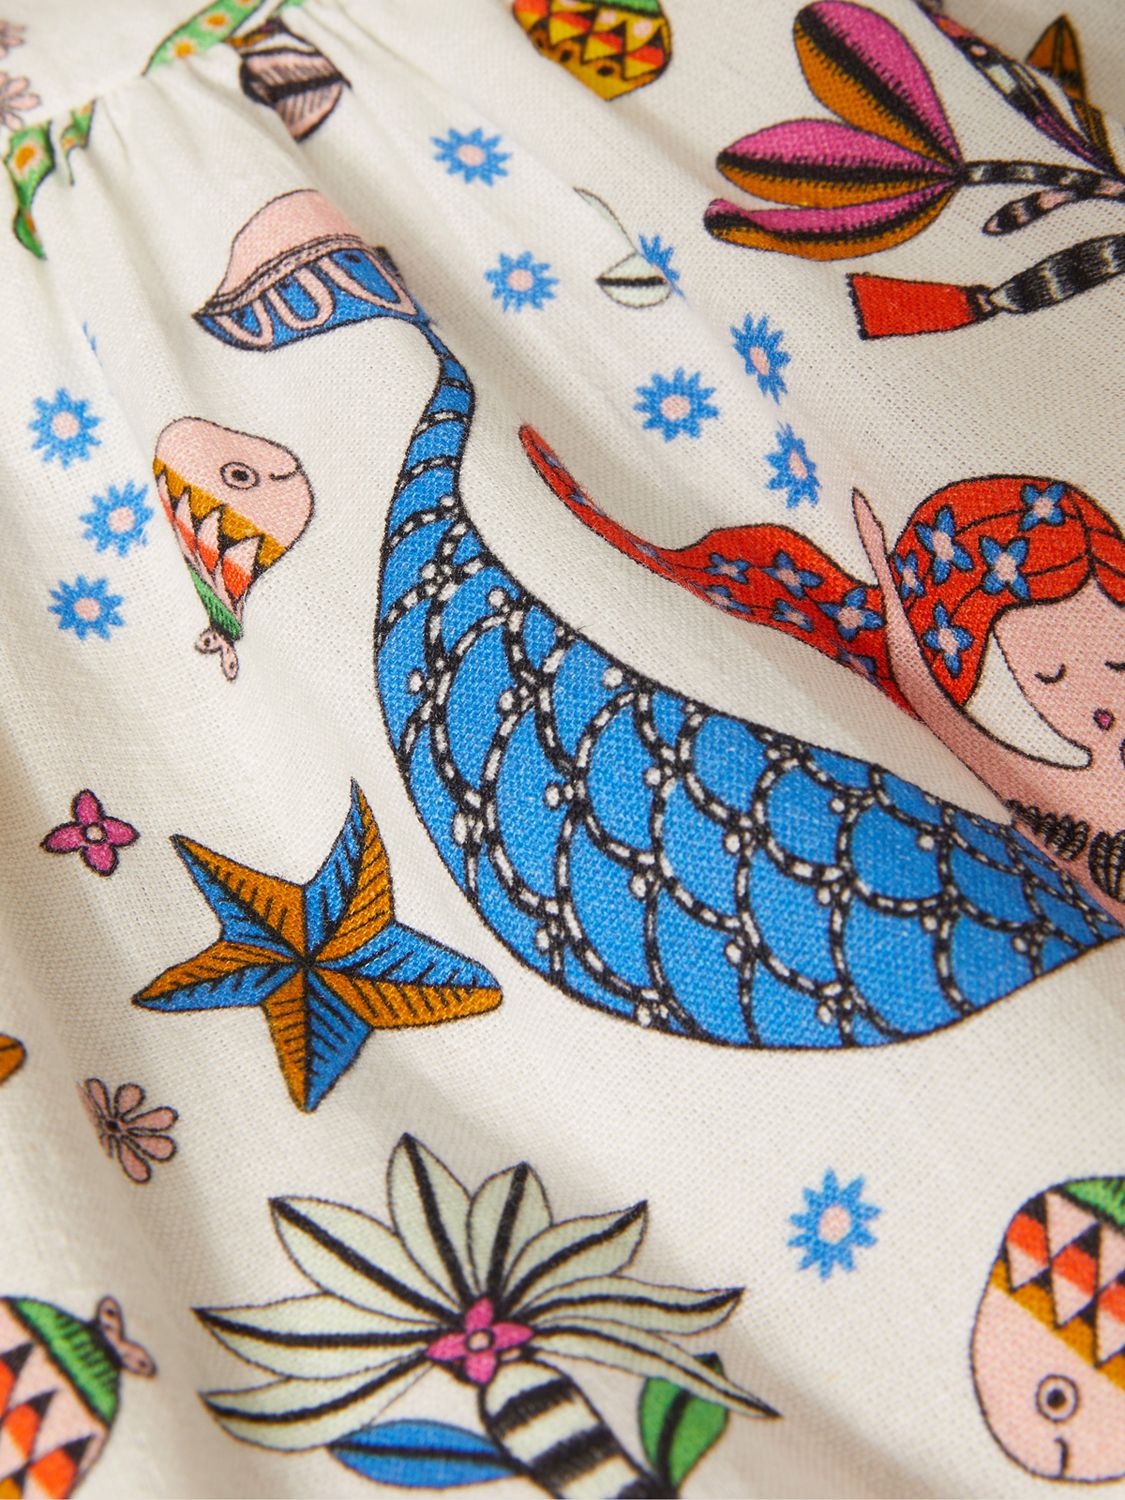 Angels by Accessorize Kids' Mermaid Print Smock Dress, White/Multi, 18-24M